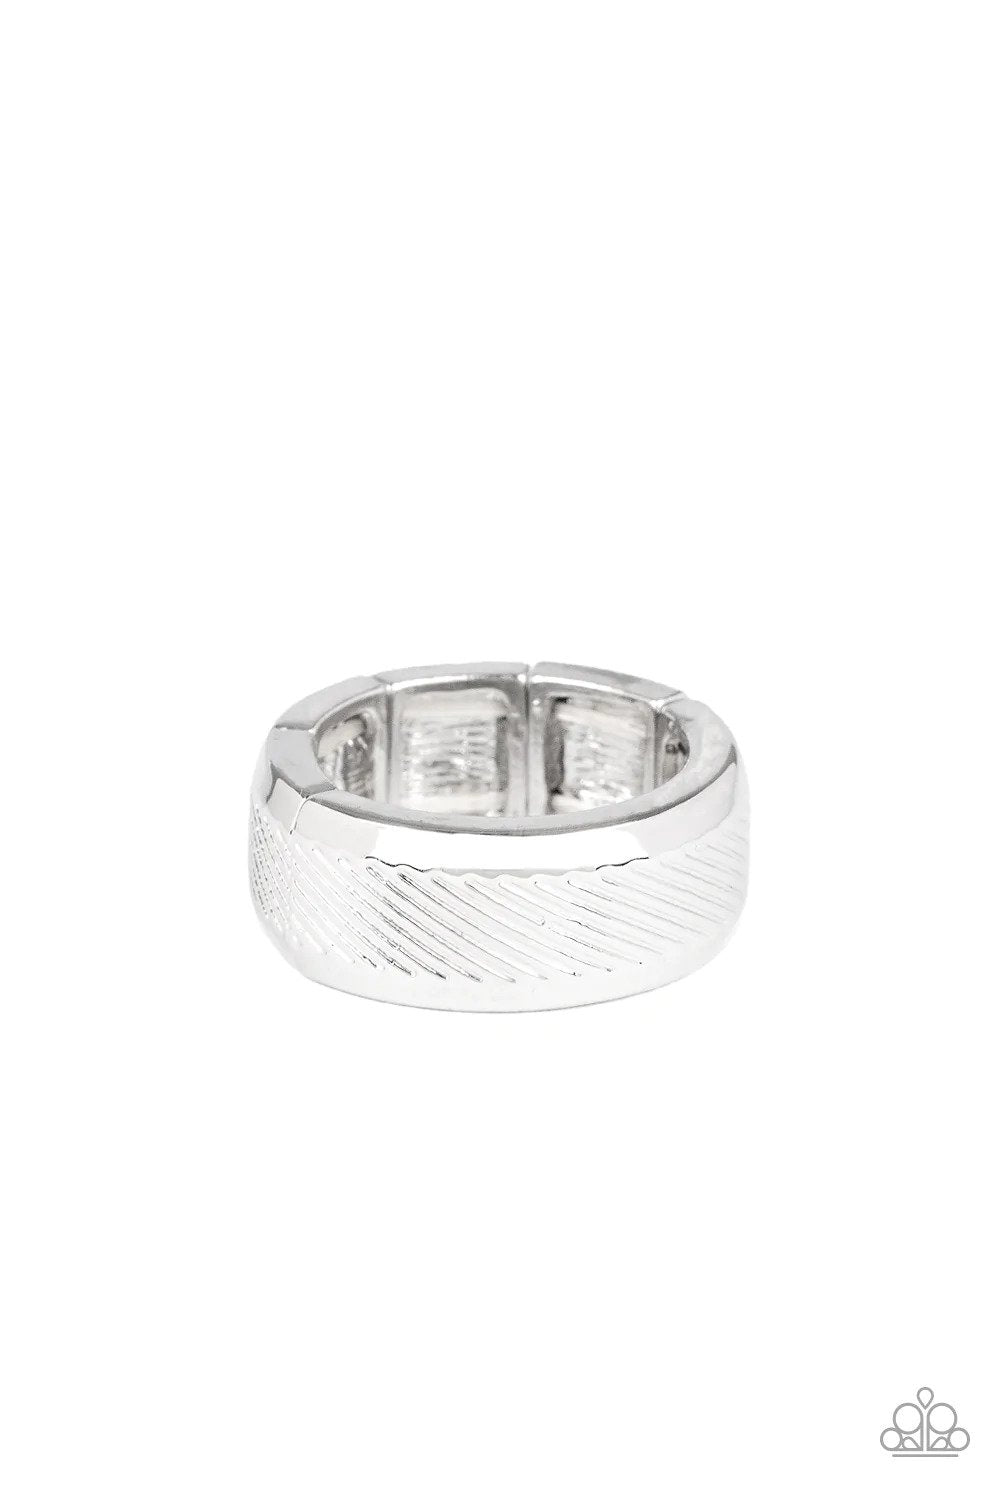 In A Scrape Men's Silver Ring - Paparazzi Accessories- lightbox - CarasShop.com - $5 Jewelry by Cara Jewels